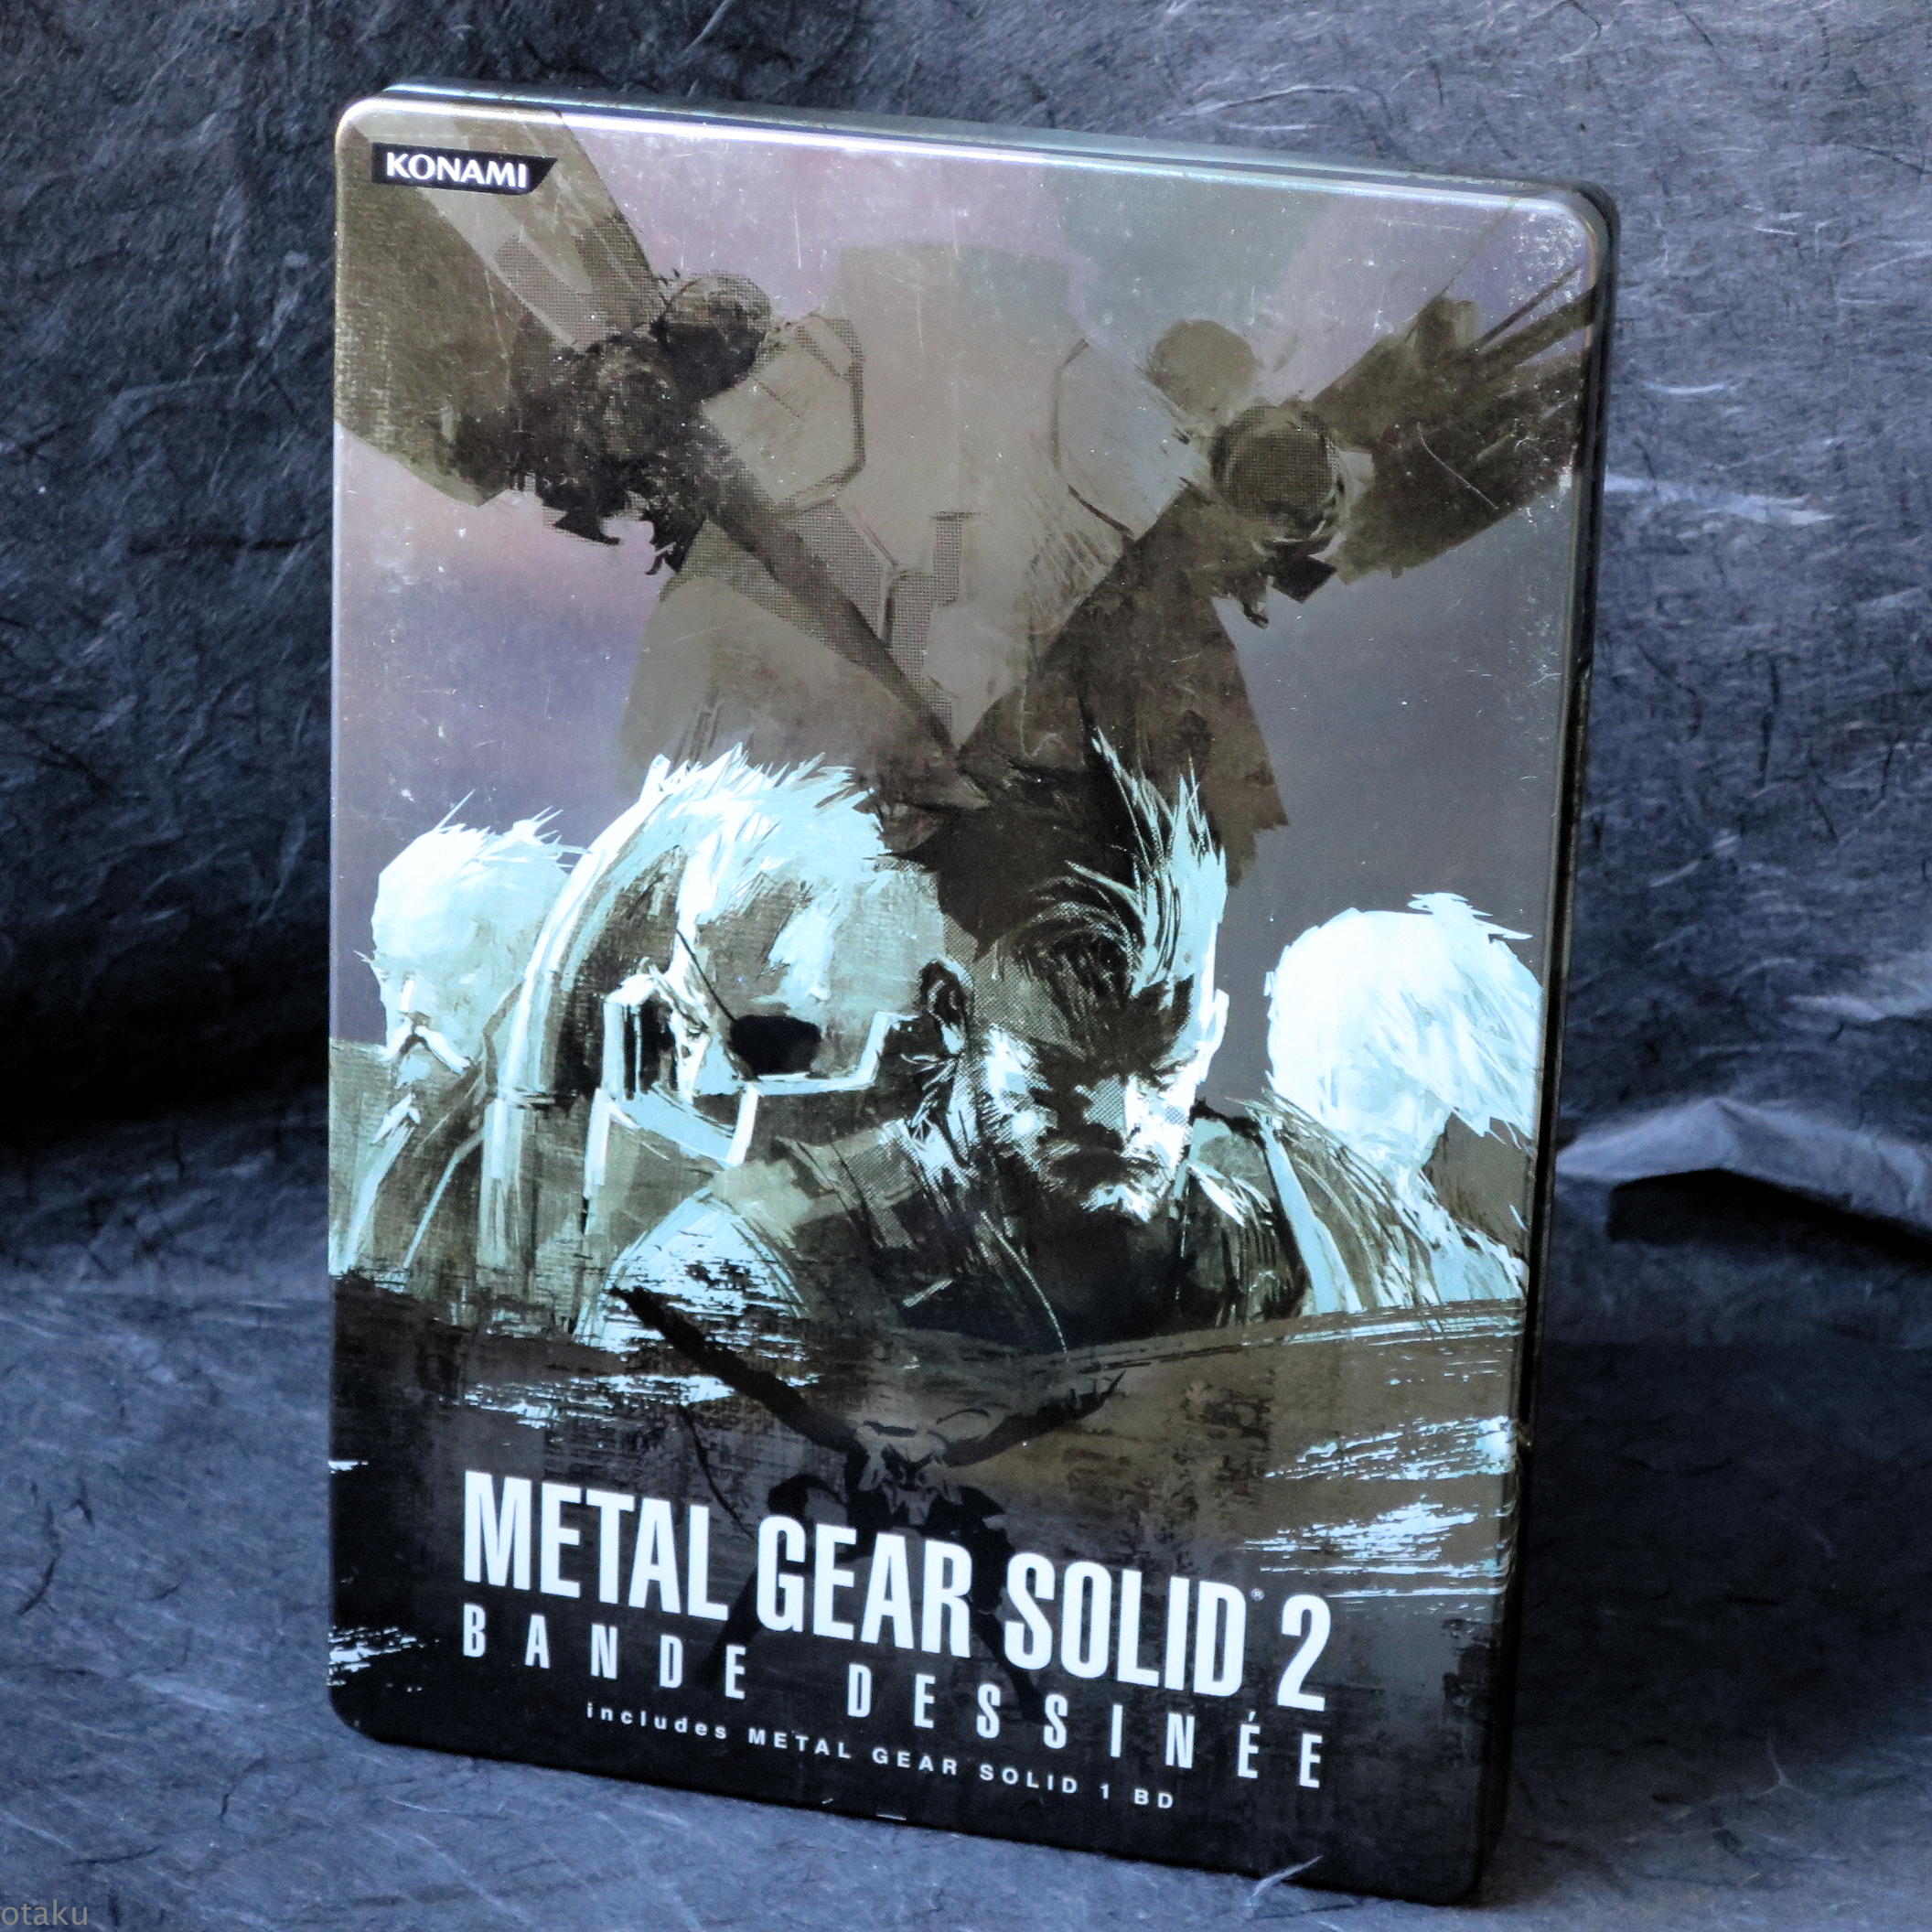 Metal Gear Solid 2 Bande Dessinee Dvd